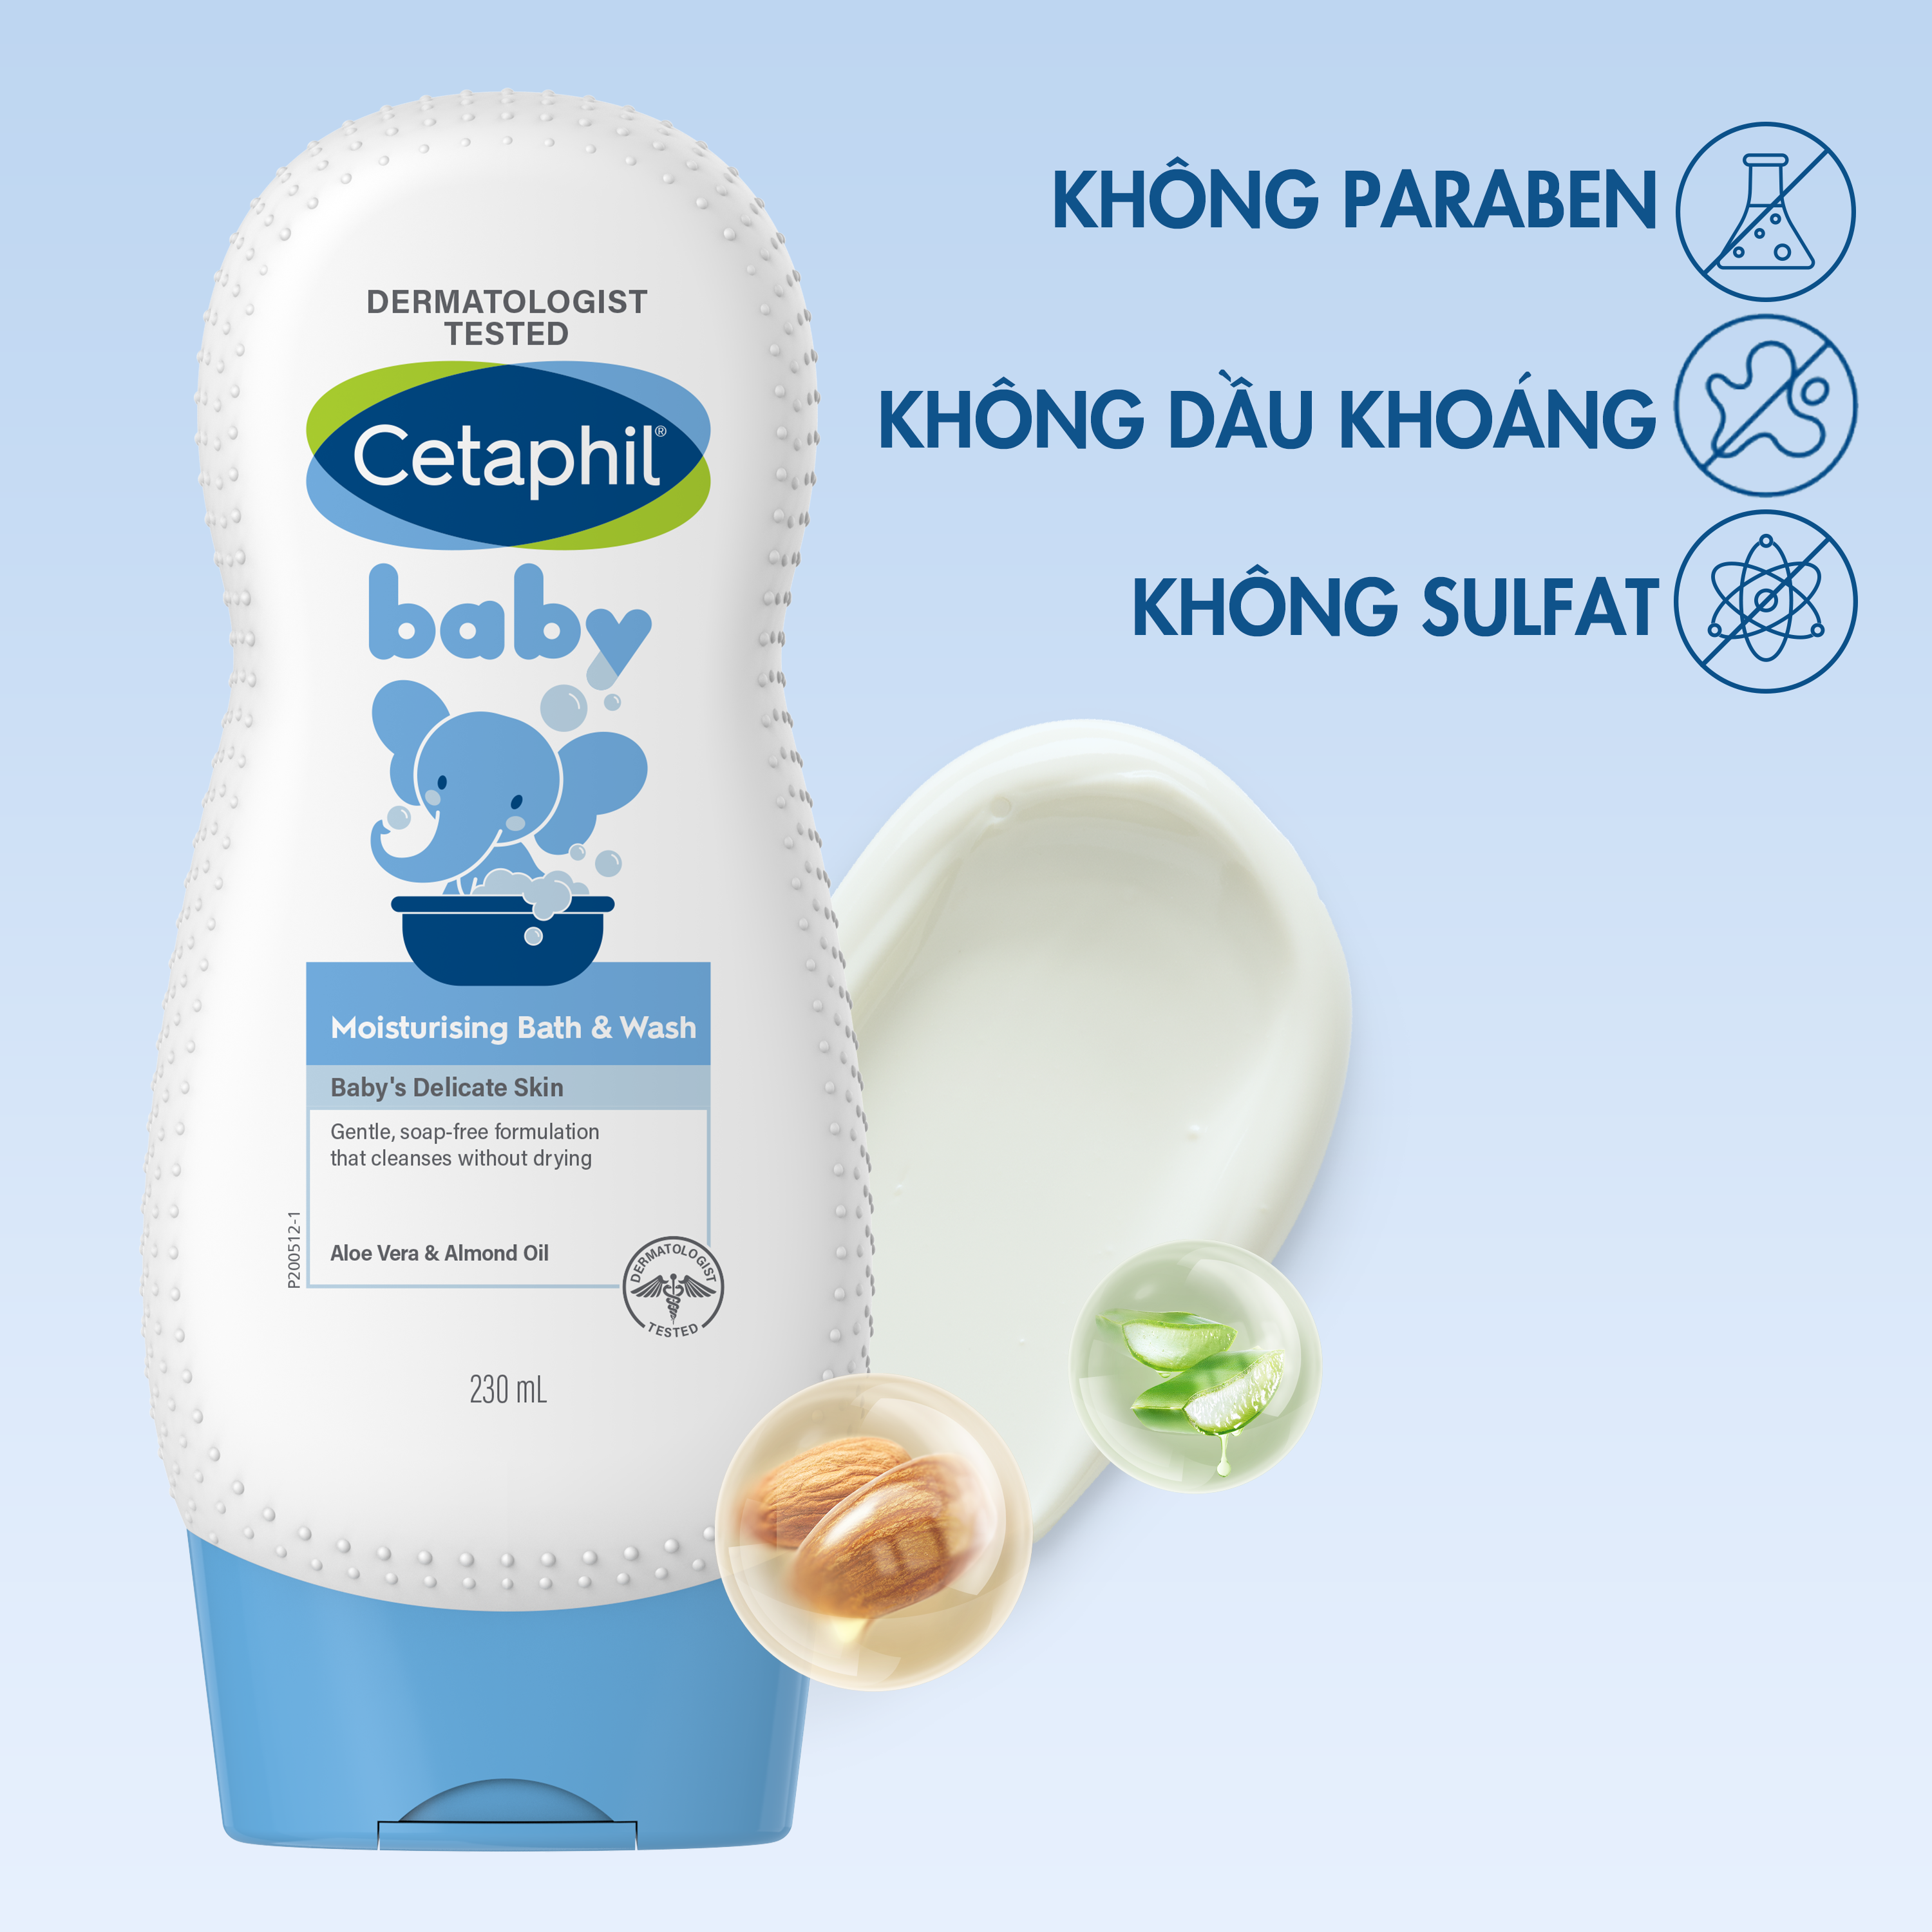 Cetaphil Baby Moisturizing Bath & Wash Ingredients